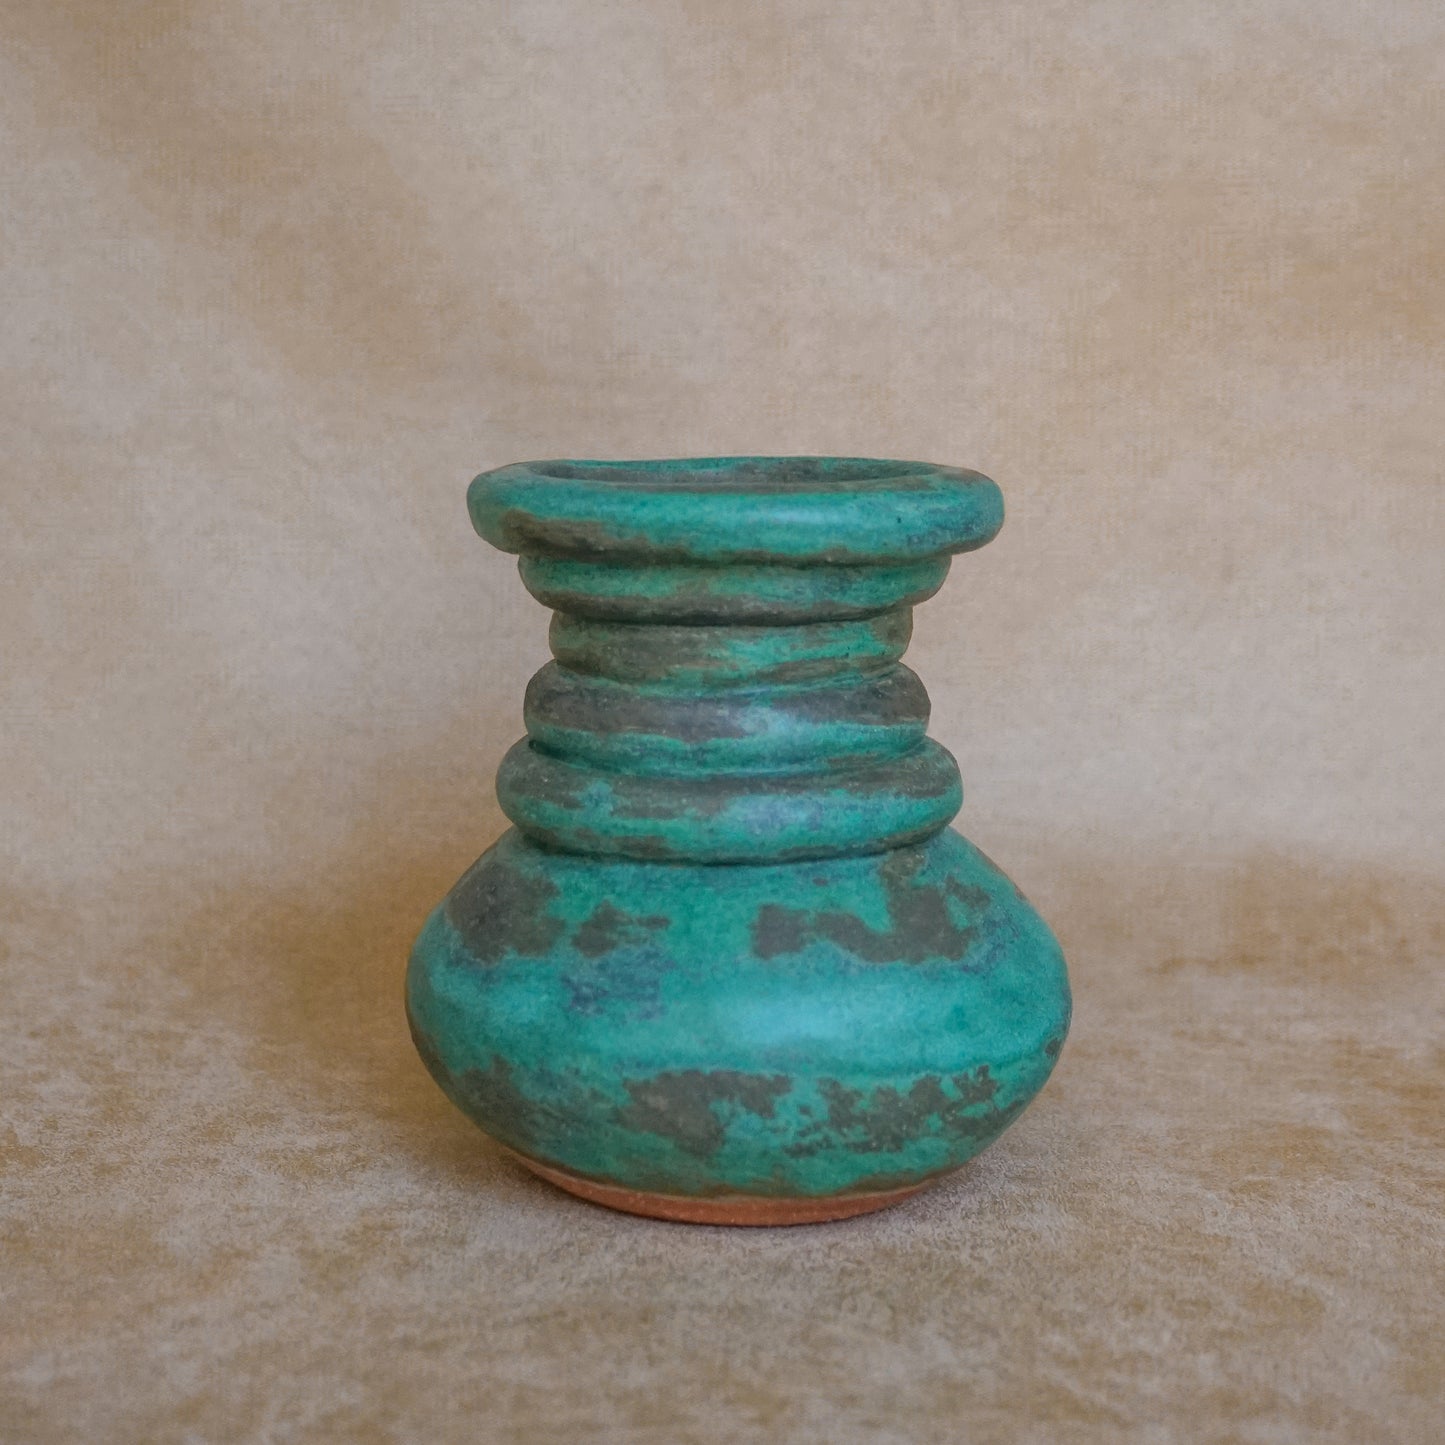 The Santa Fe + Teal Coil Vase